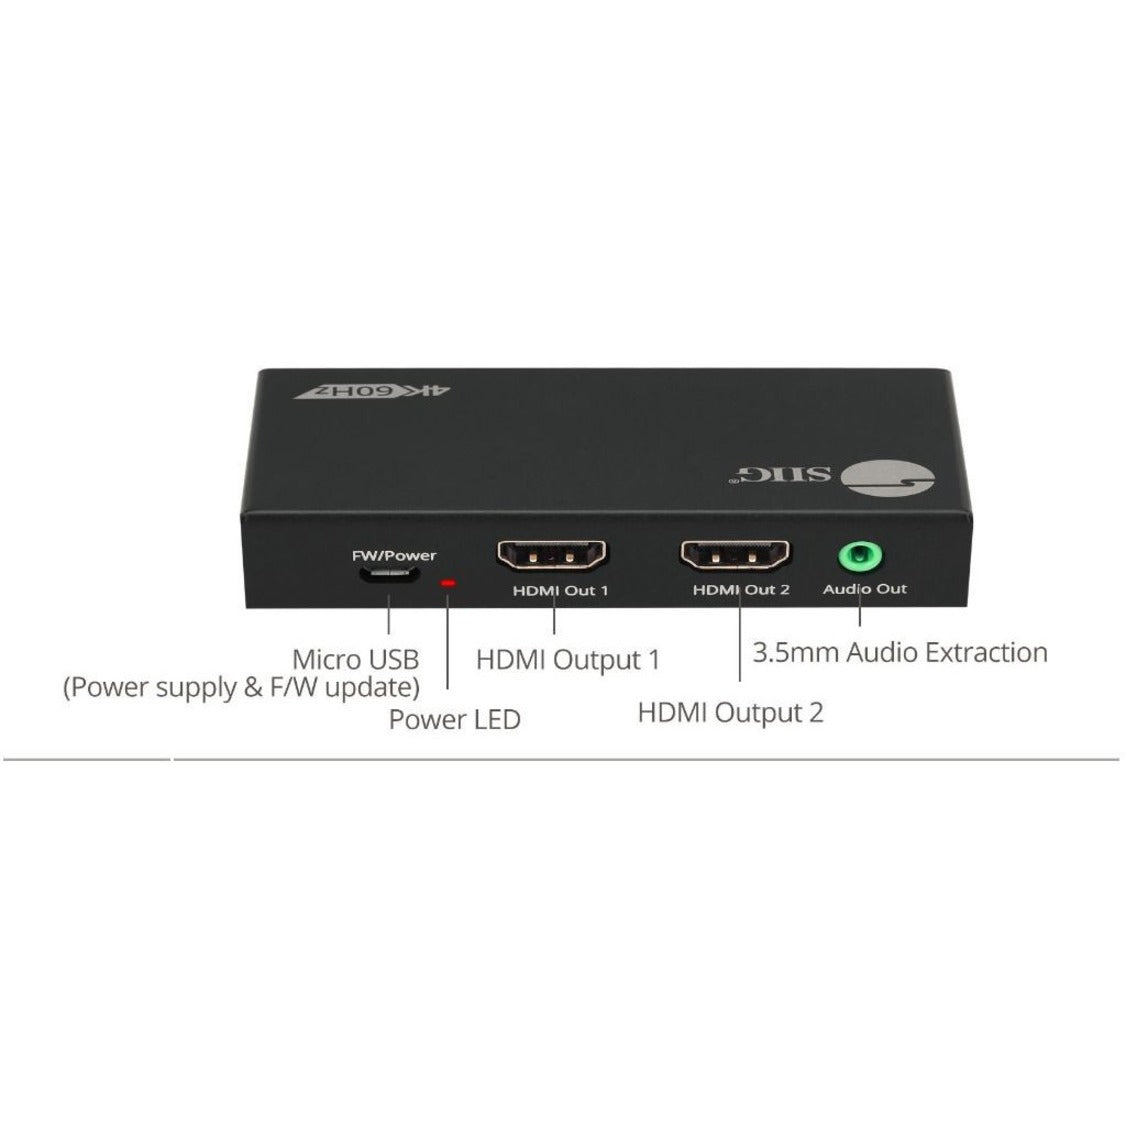 SIIG CE-H26D11-S1 2-Port HDMI 2.0 4K HDR Splitter / Switcher, Color Box